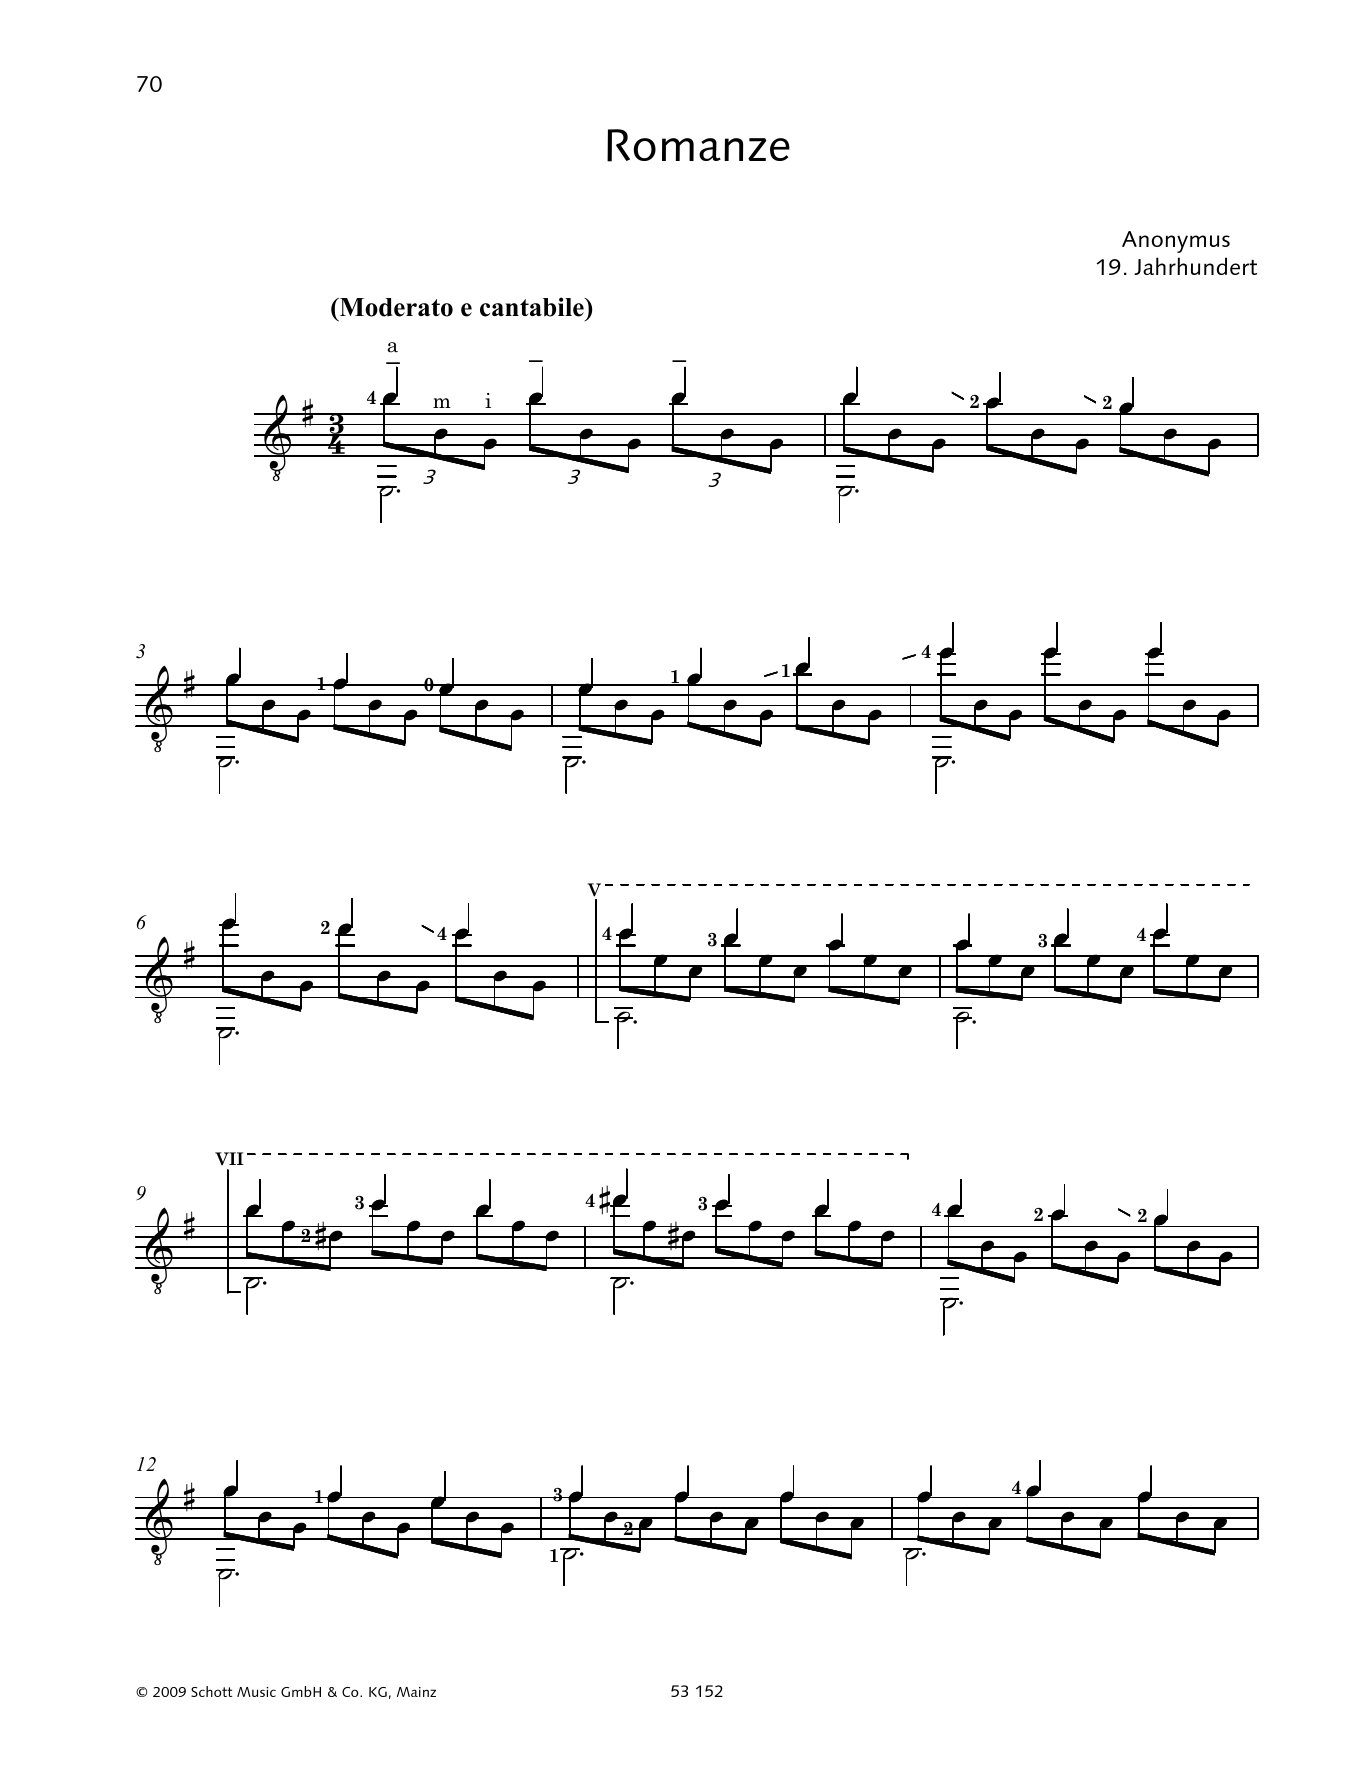 Konrad Ragossnig Romanze Sheet Music Notes & Chords for Solo Guitar - Download or Print PDF